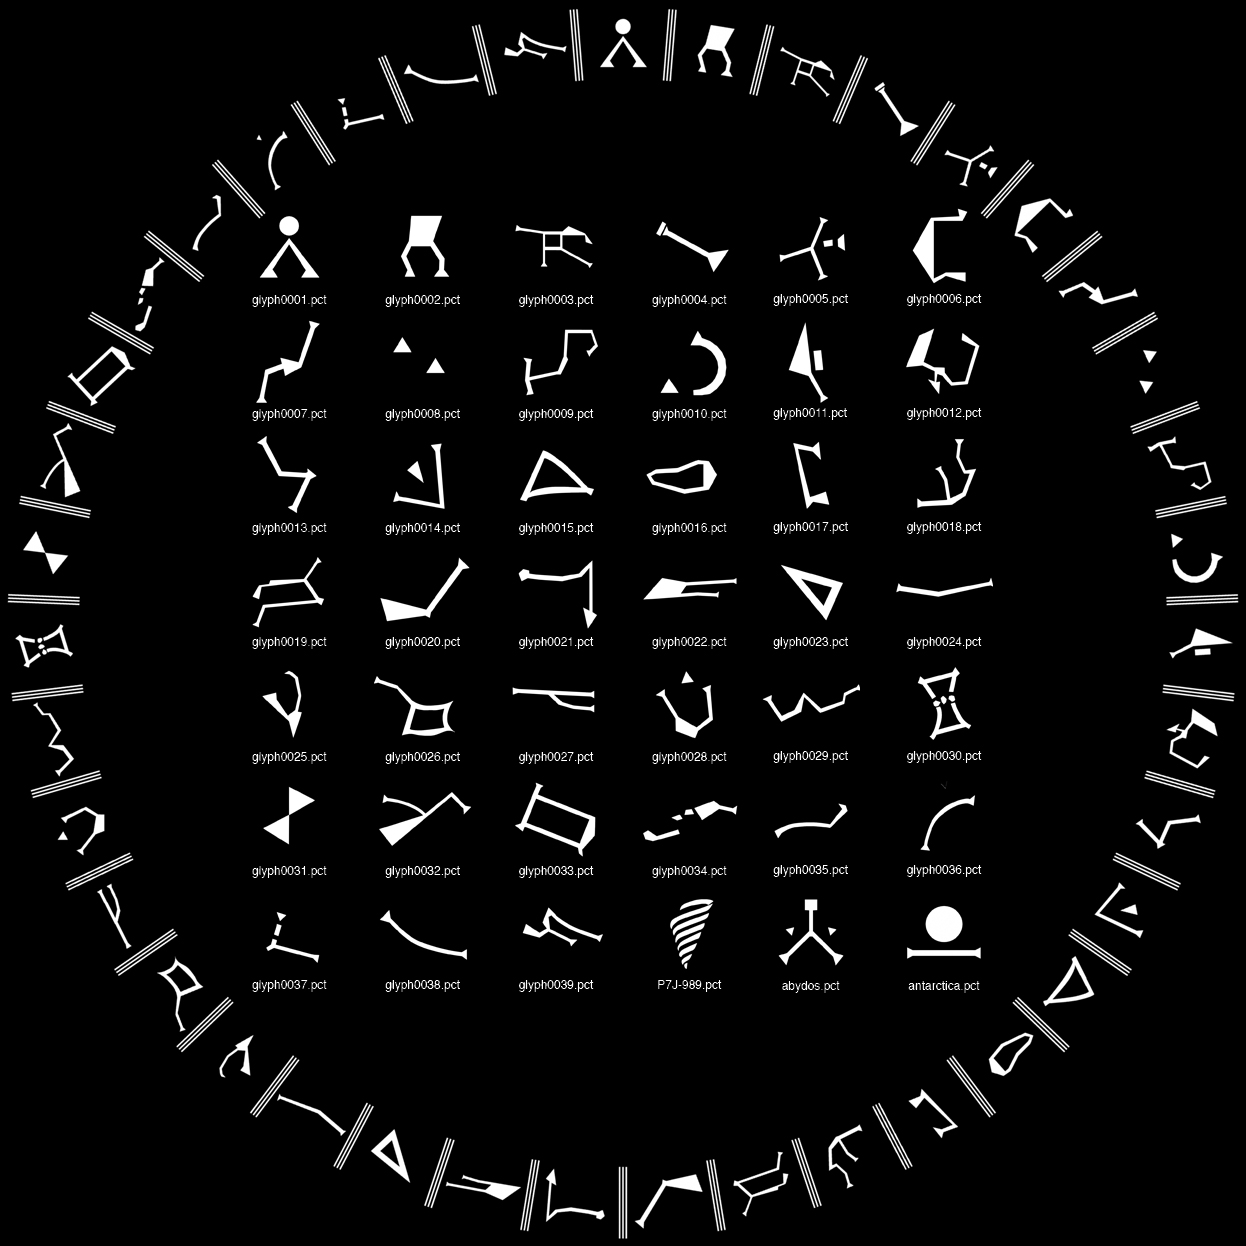 ancient glyph translator